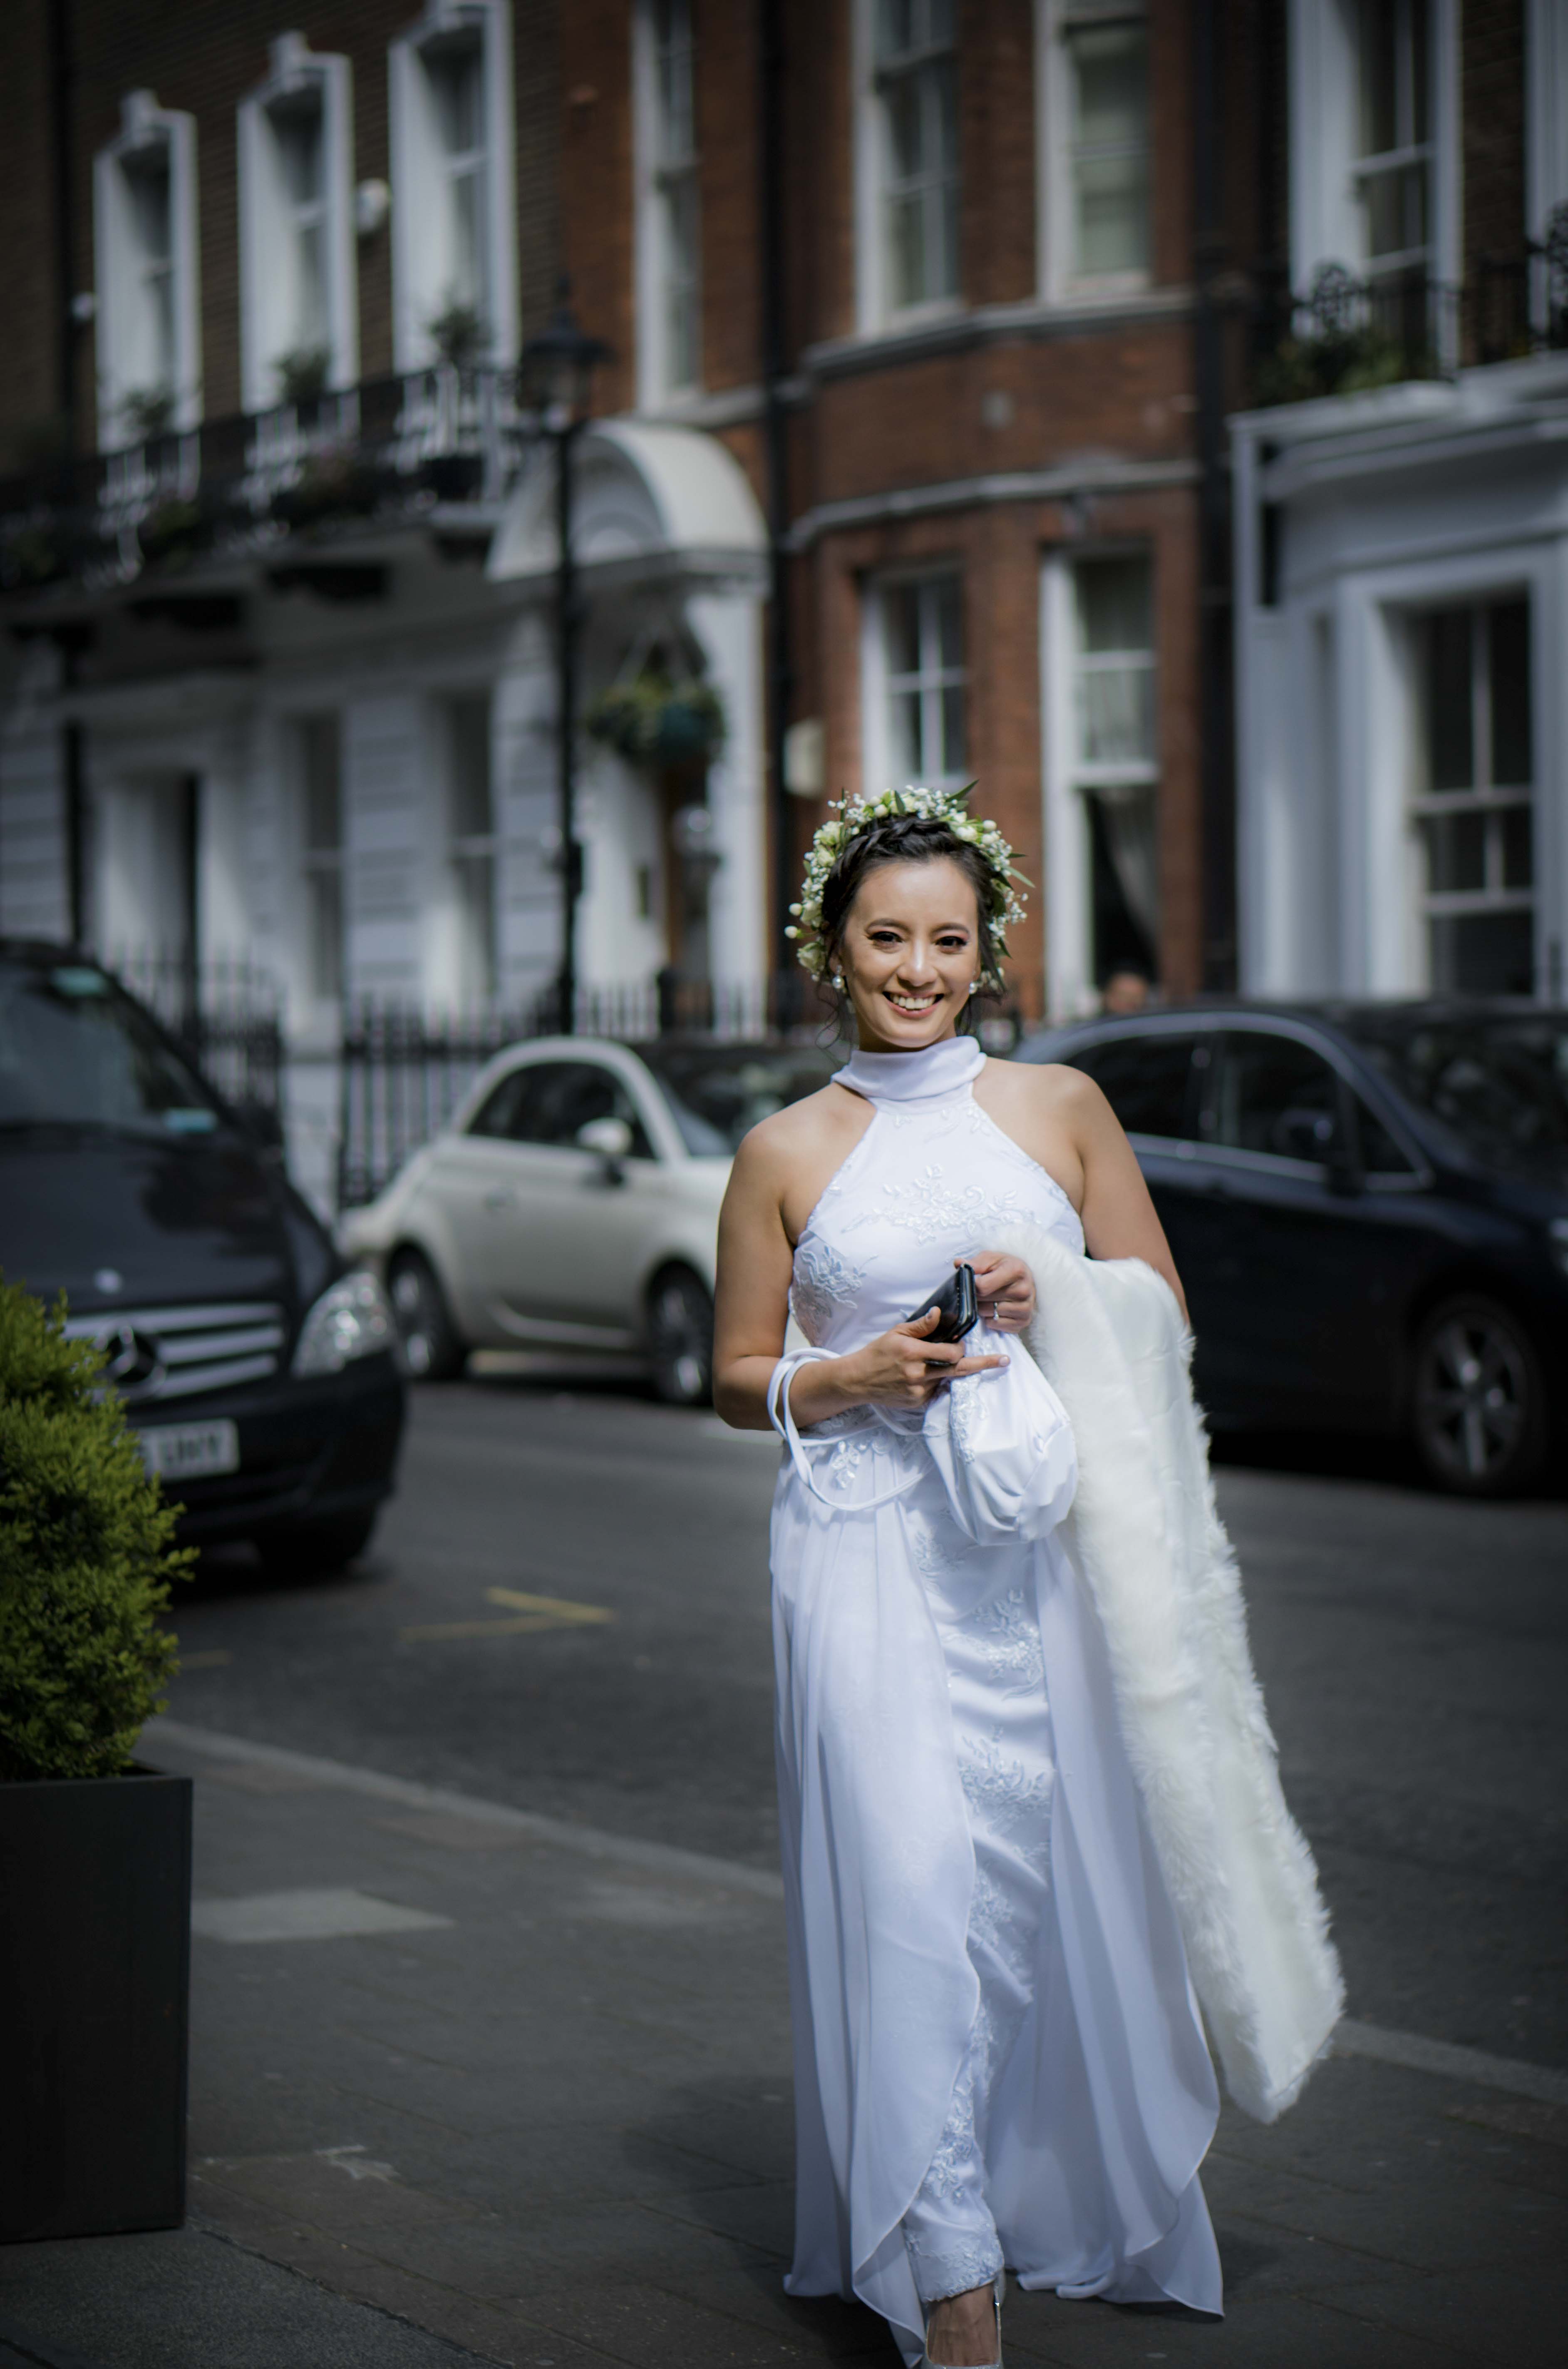 London Wedding Photographer iBlessphotography com_6